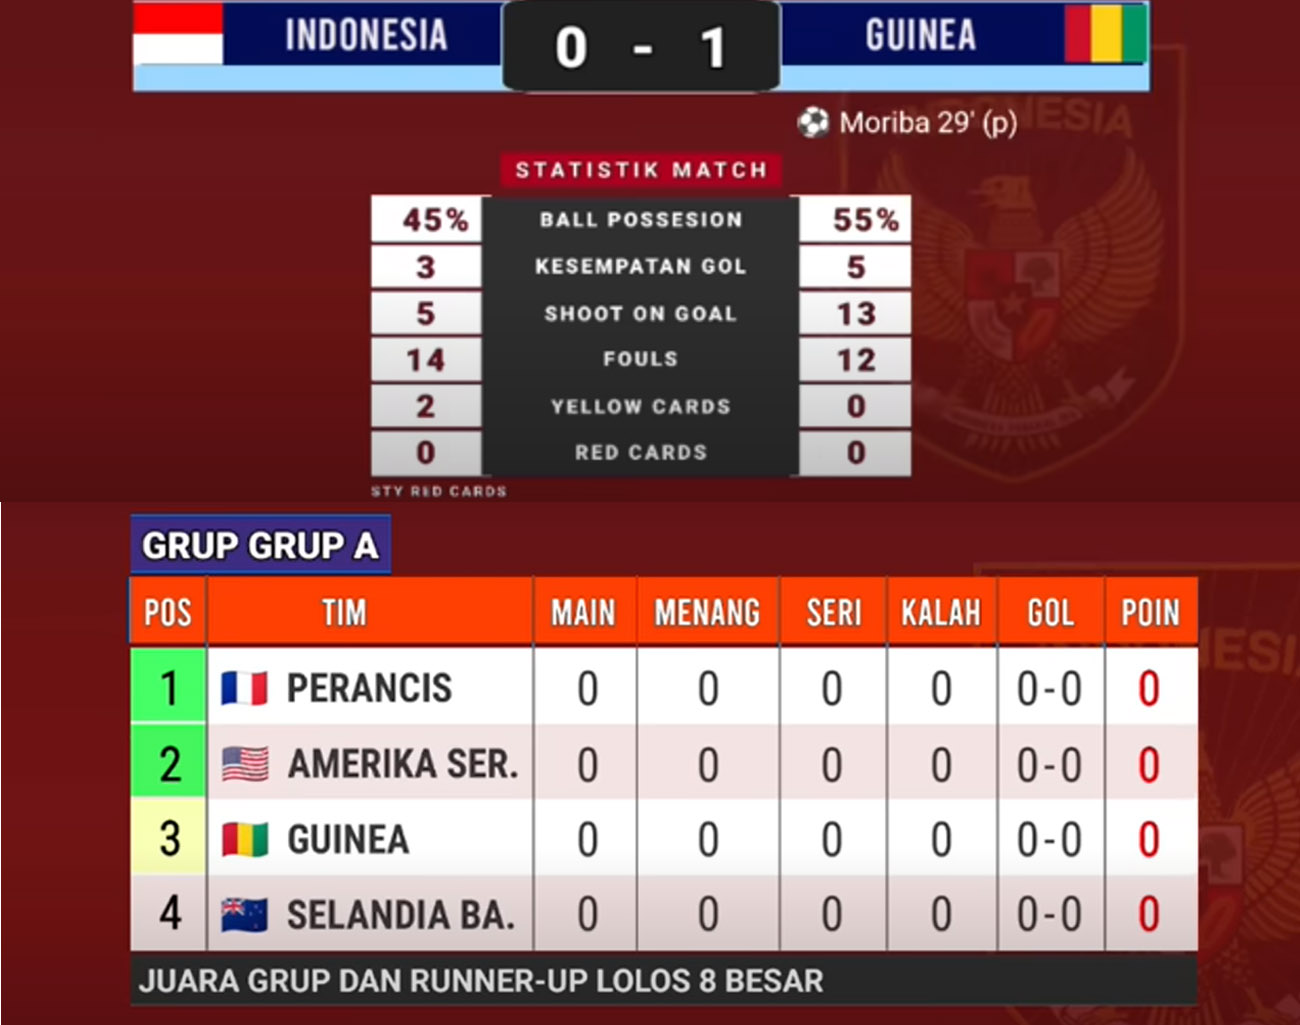 Inilah Statistik Pertandingan Indonesia vs Guinea Playoff Olimpiade Paris 2024, Guinea Unggul Penguasaan Bola